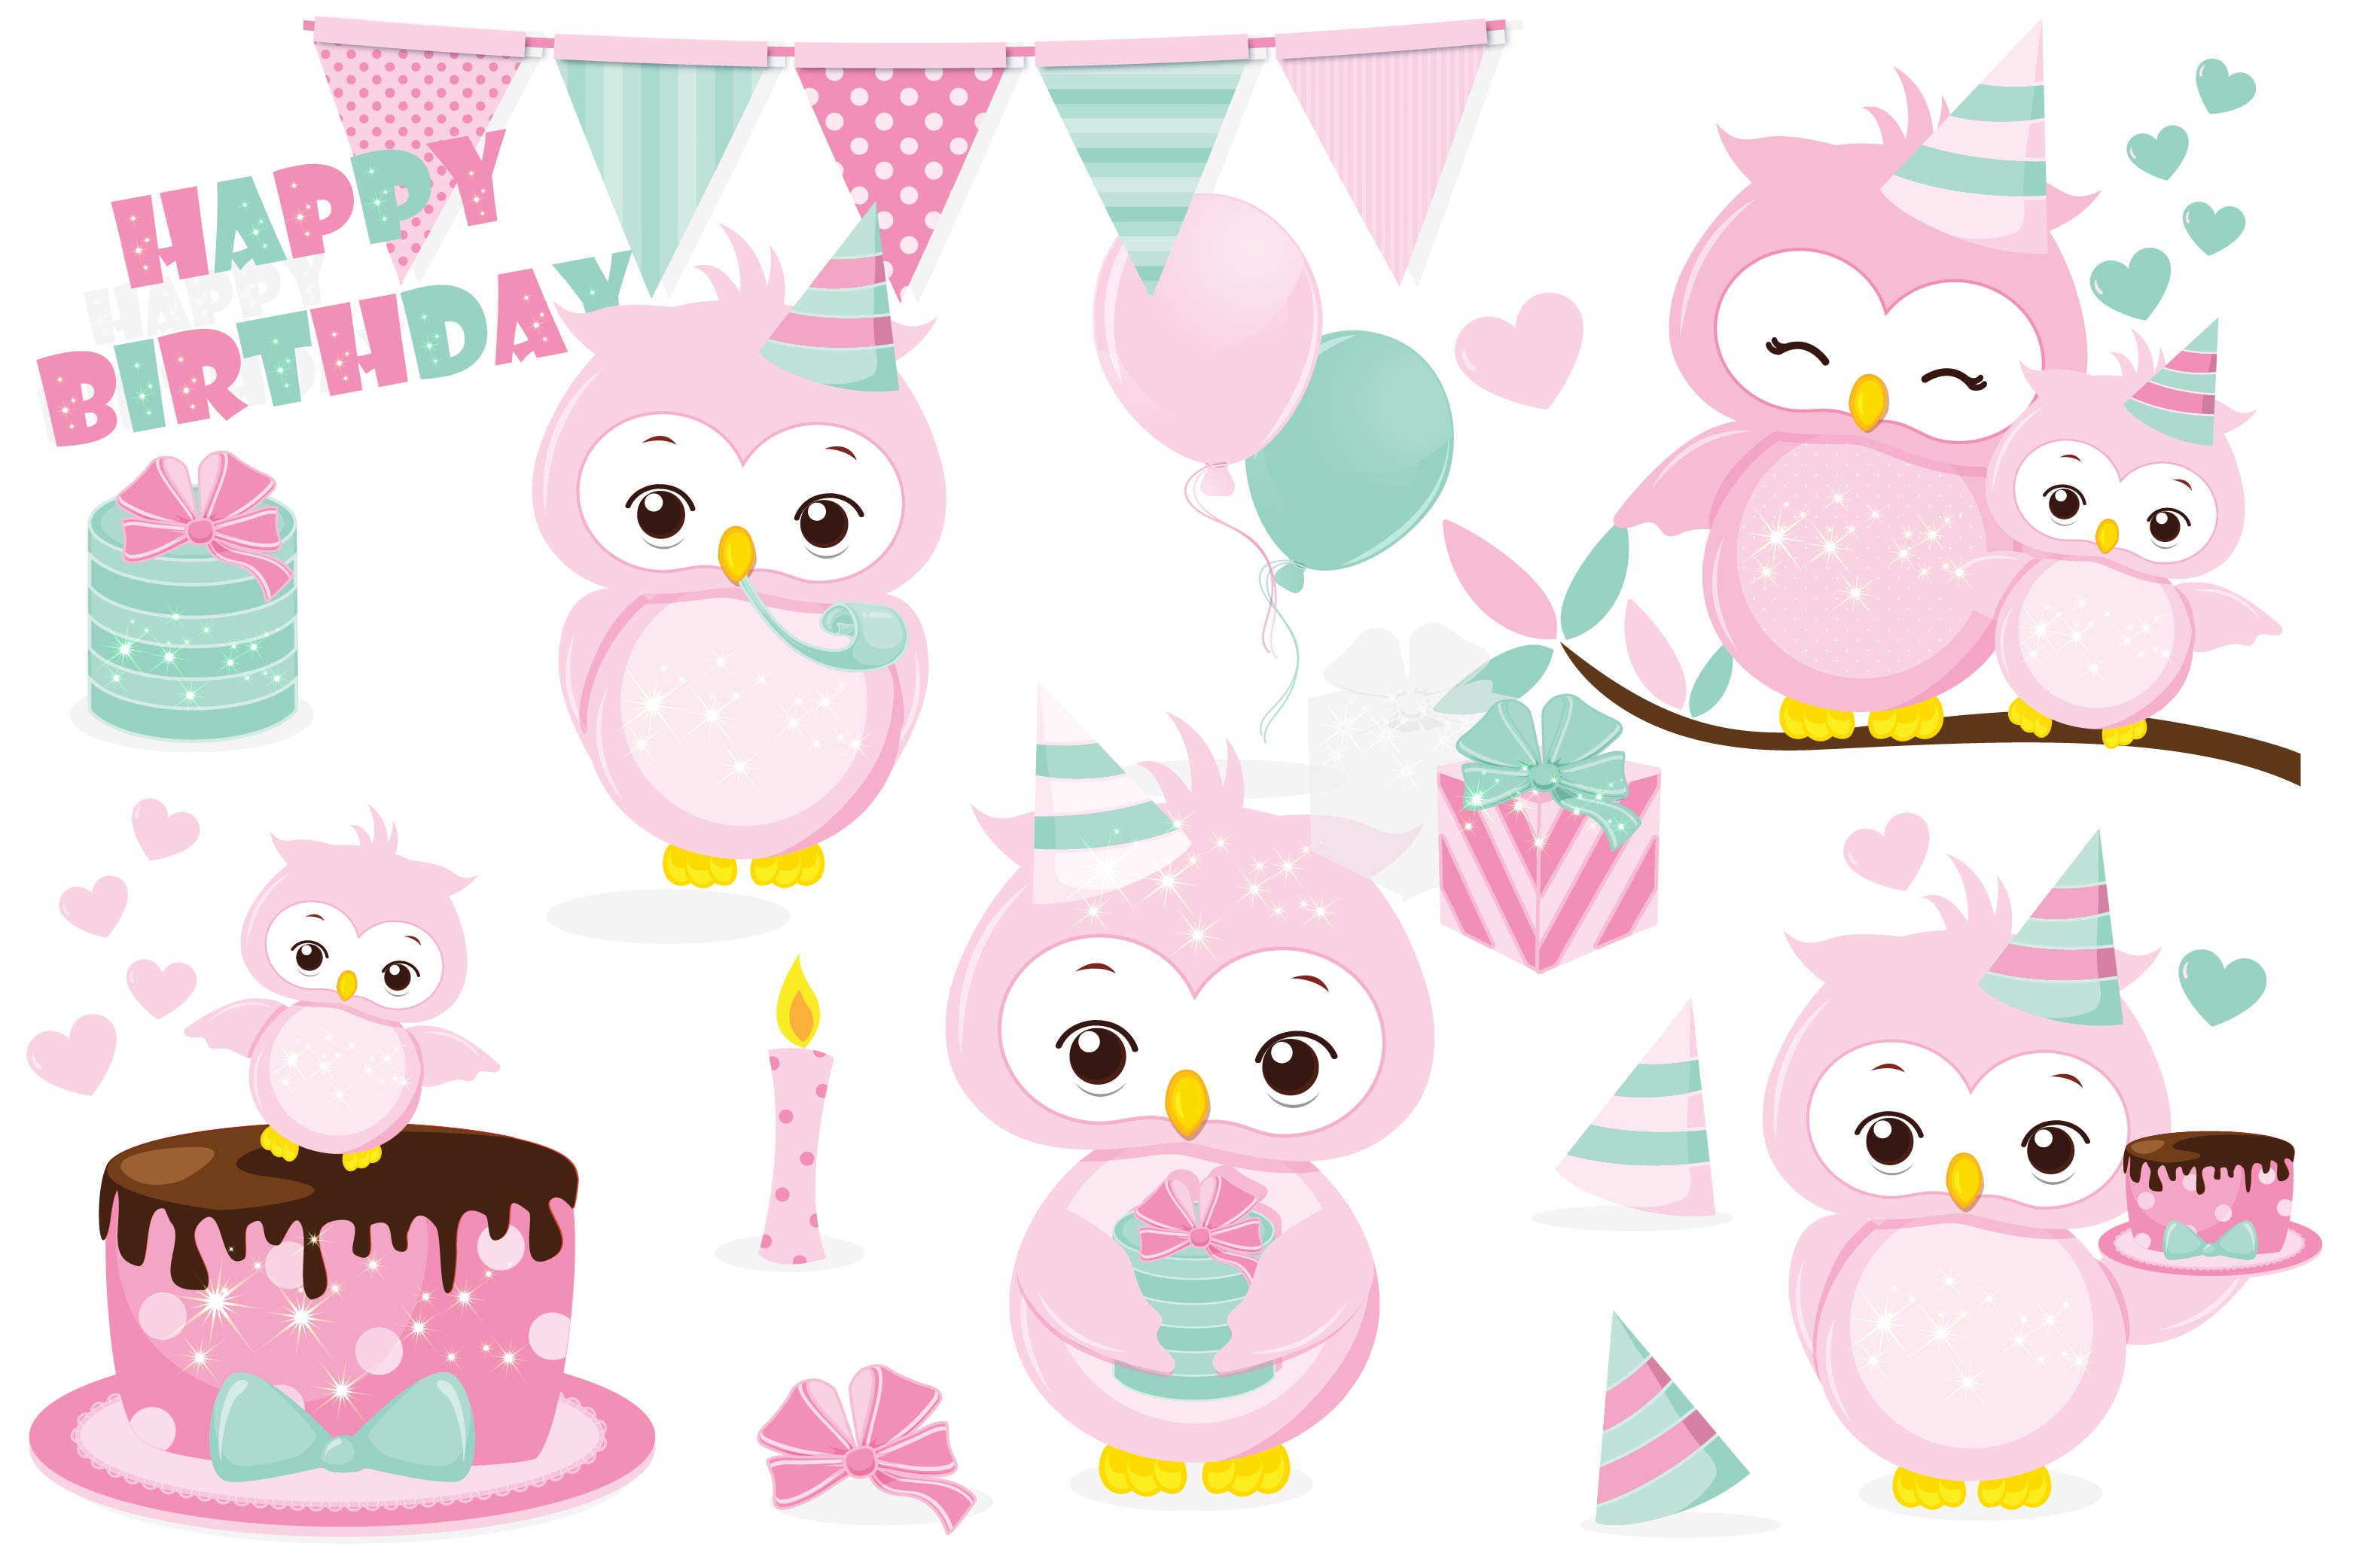 Birthday owl clipart, Birthday owl graphics